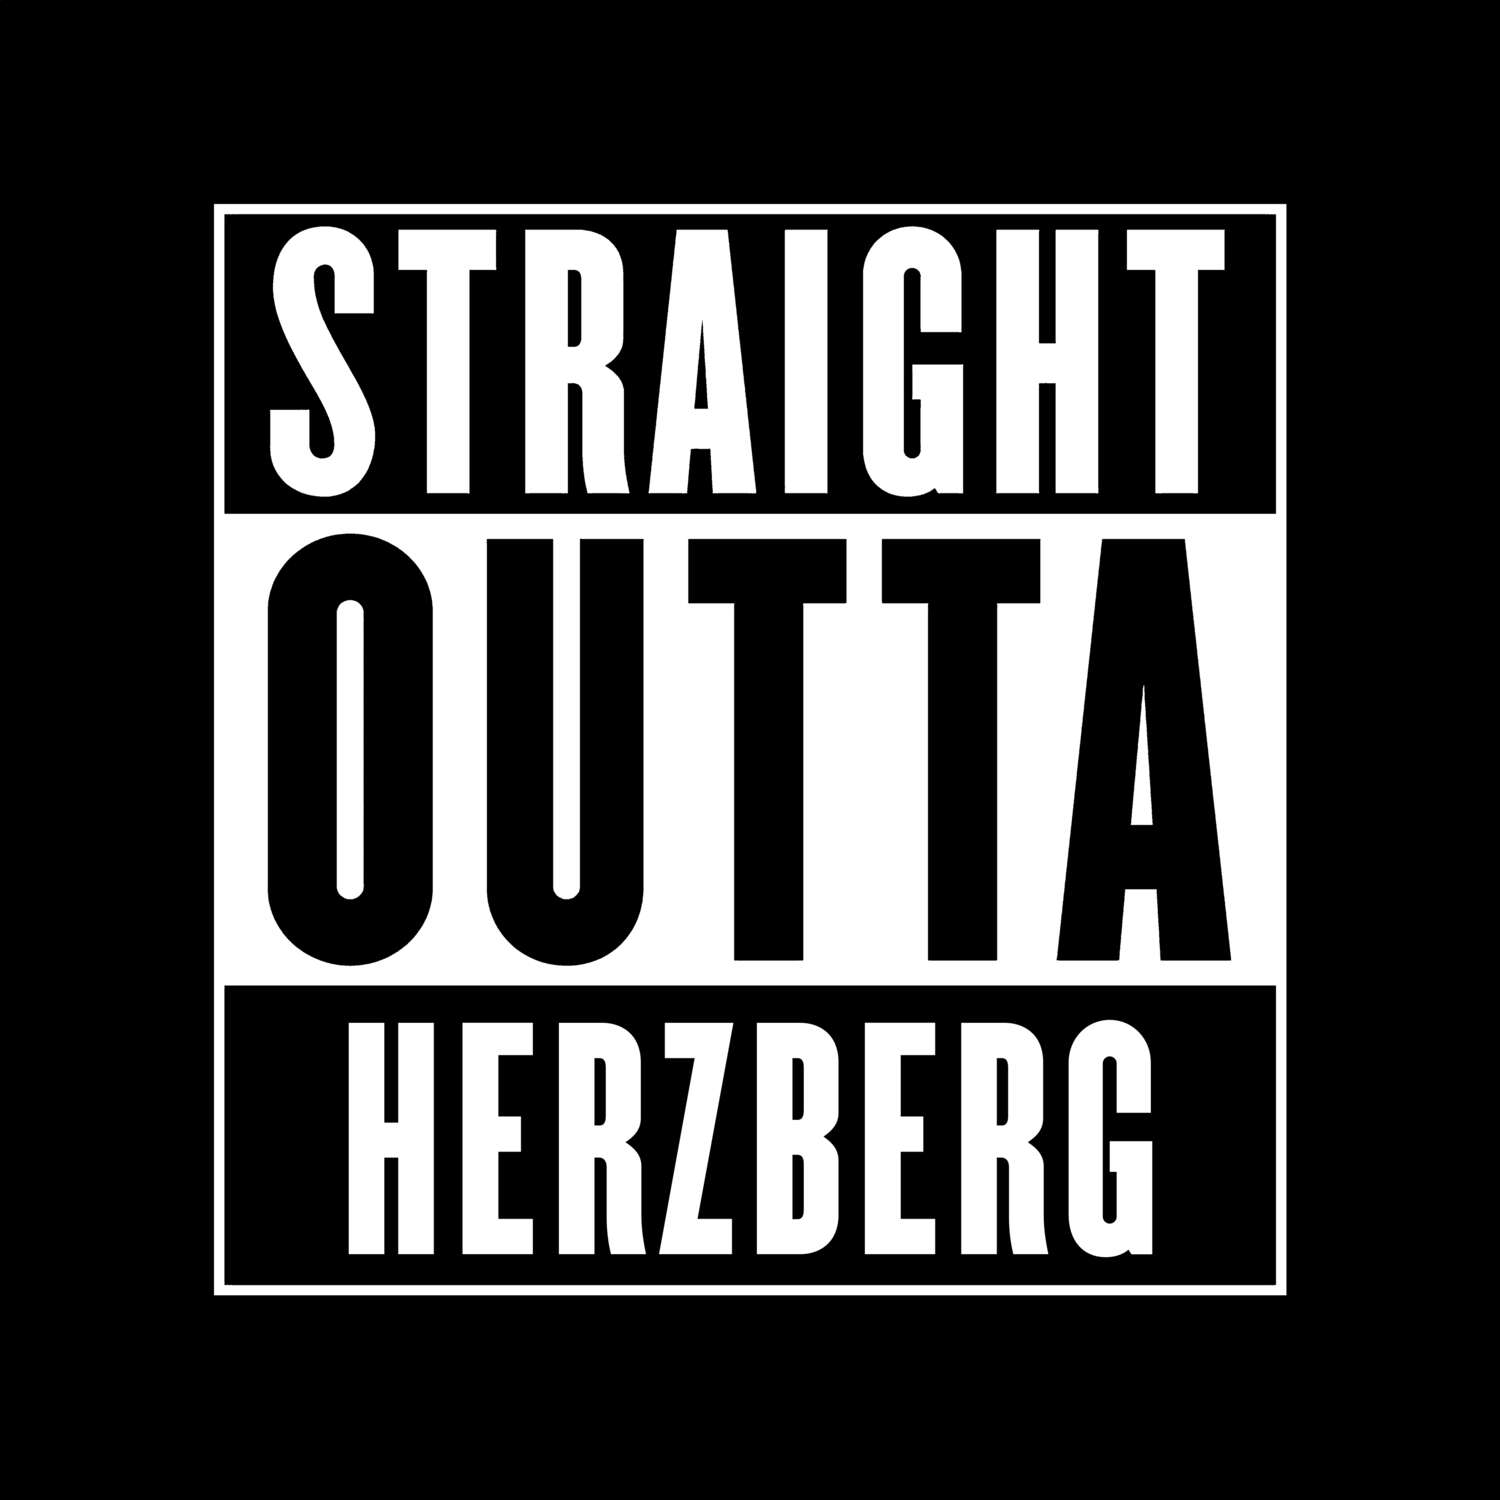 Herzberg T-Shirt »Straight Outta«